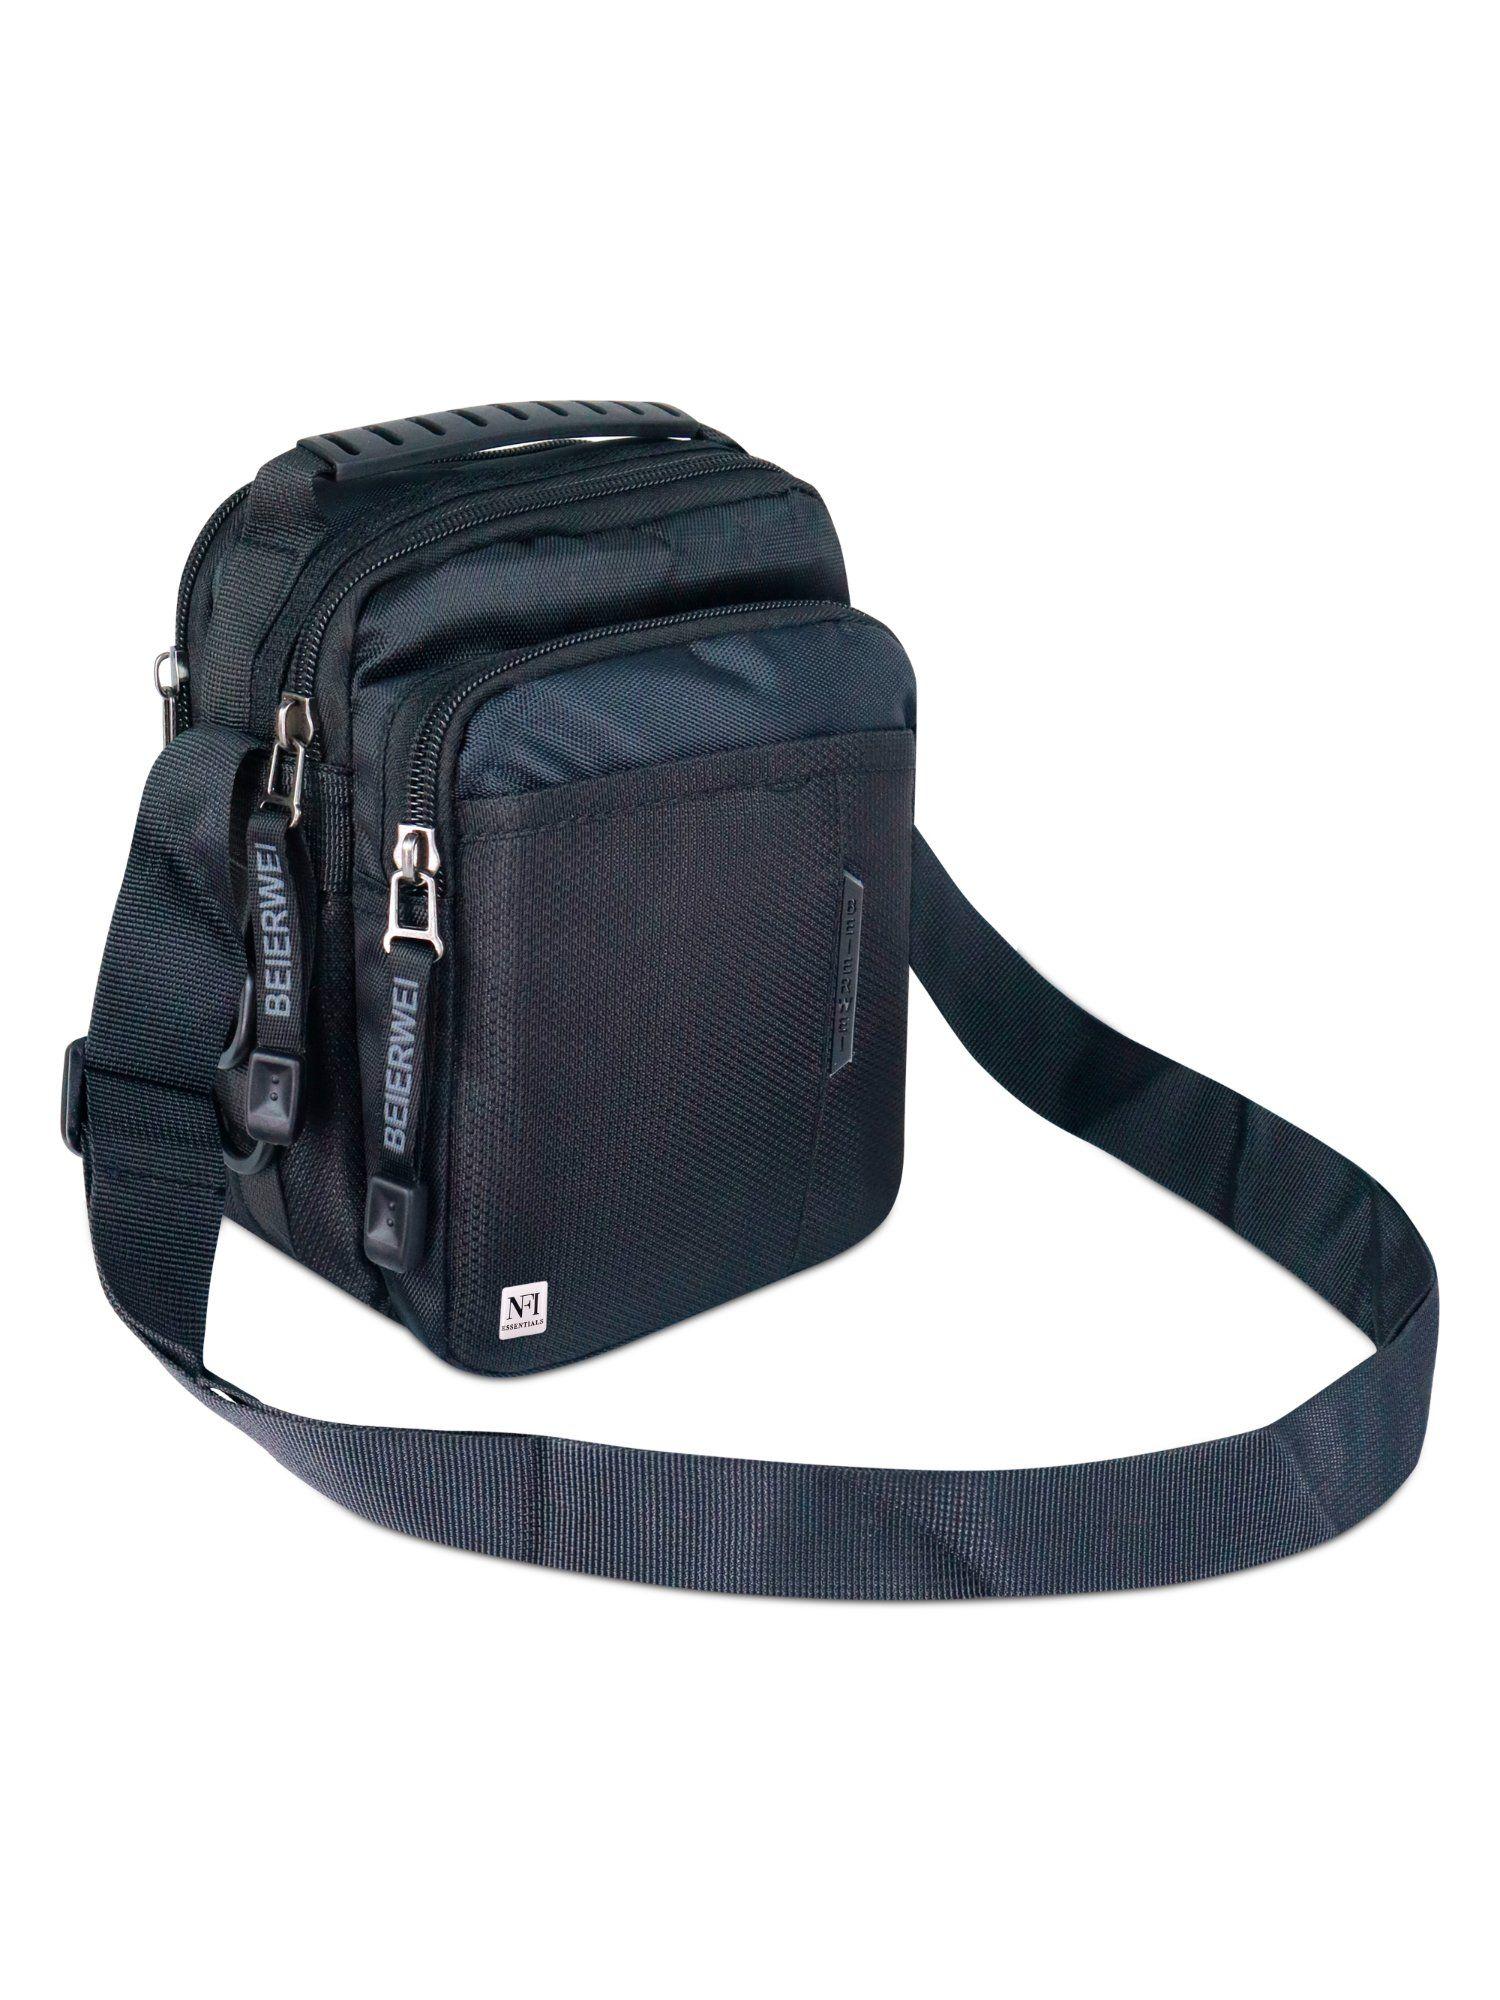 small size unisex sling bag cross body travel office business messenger bag